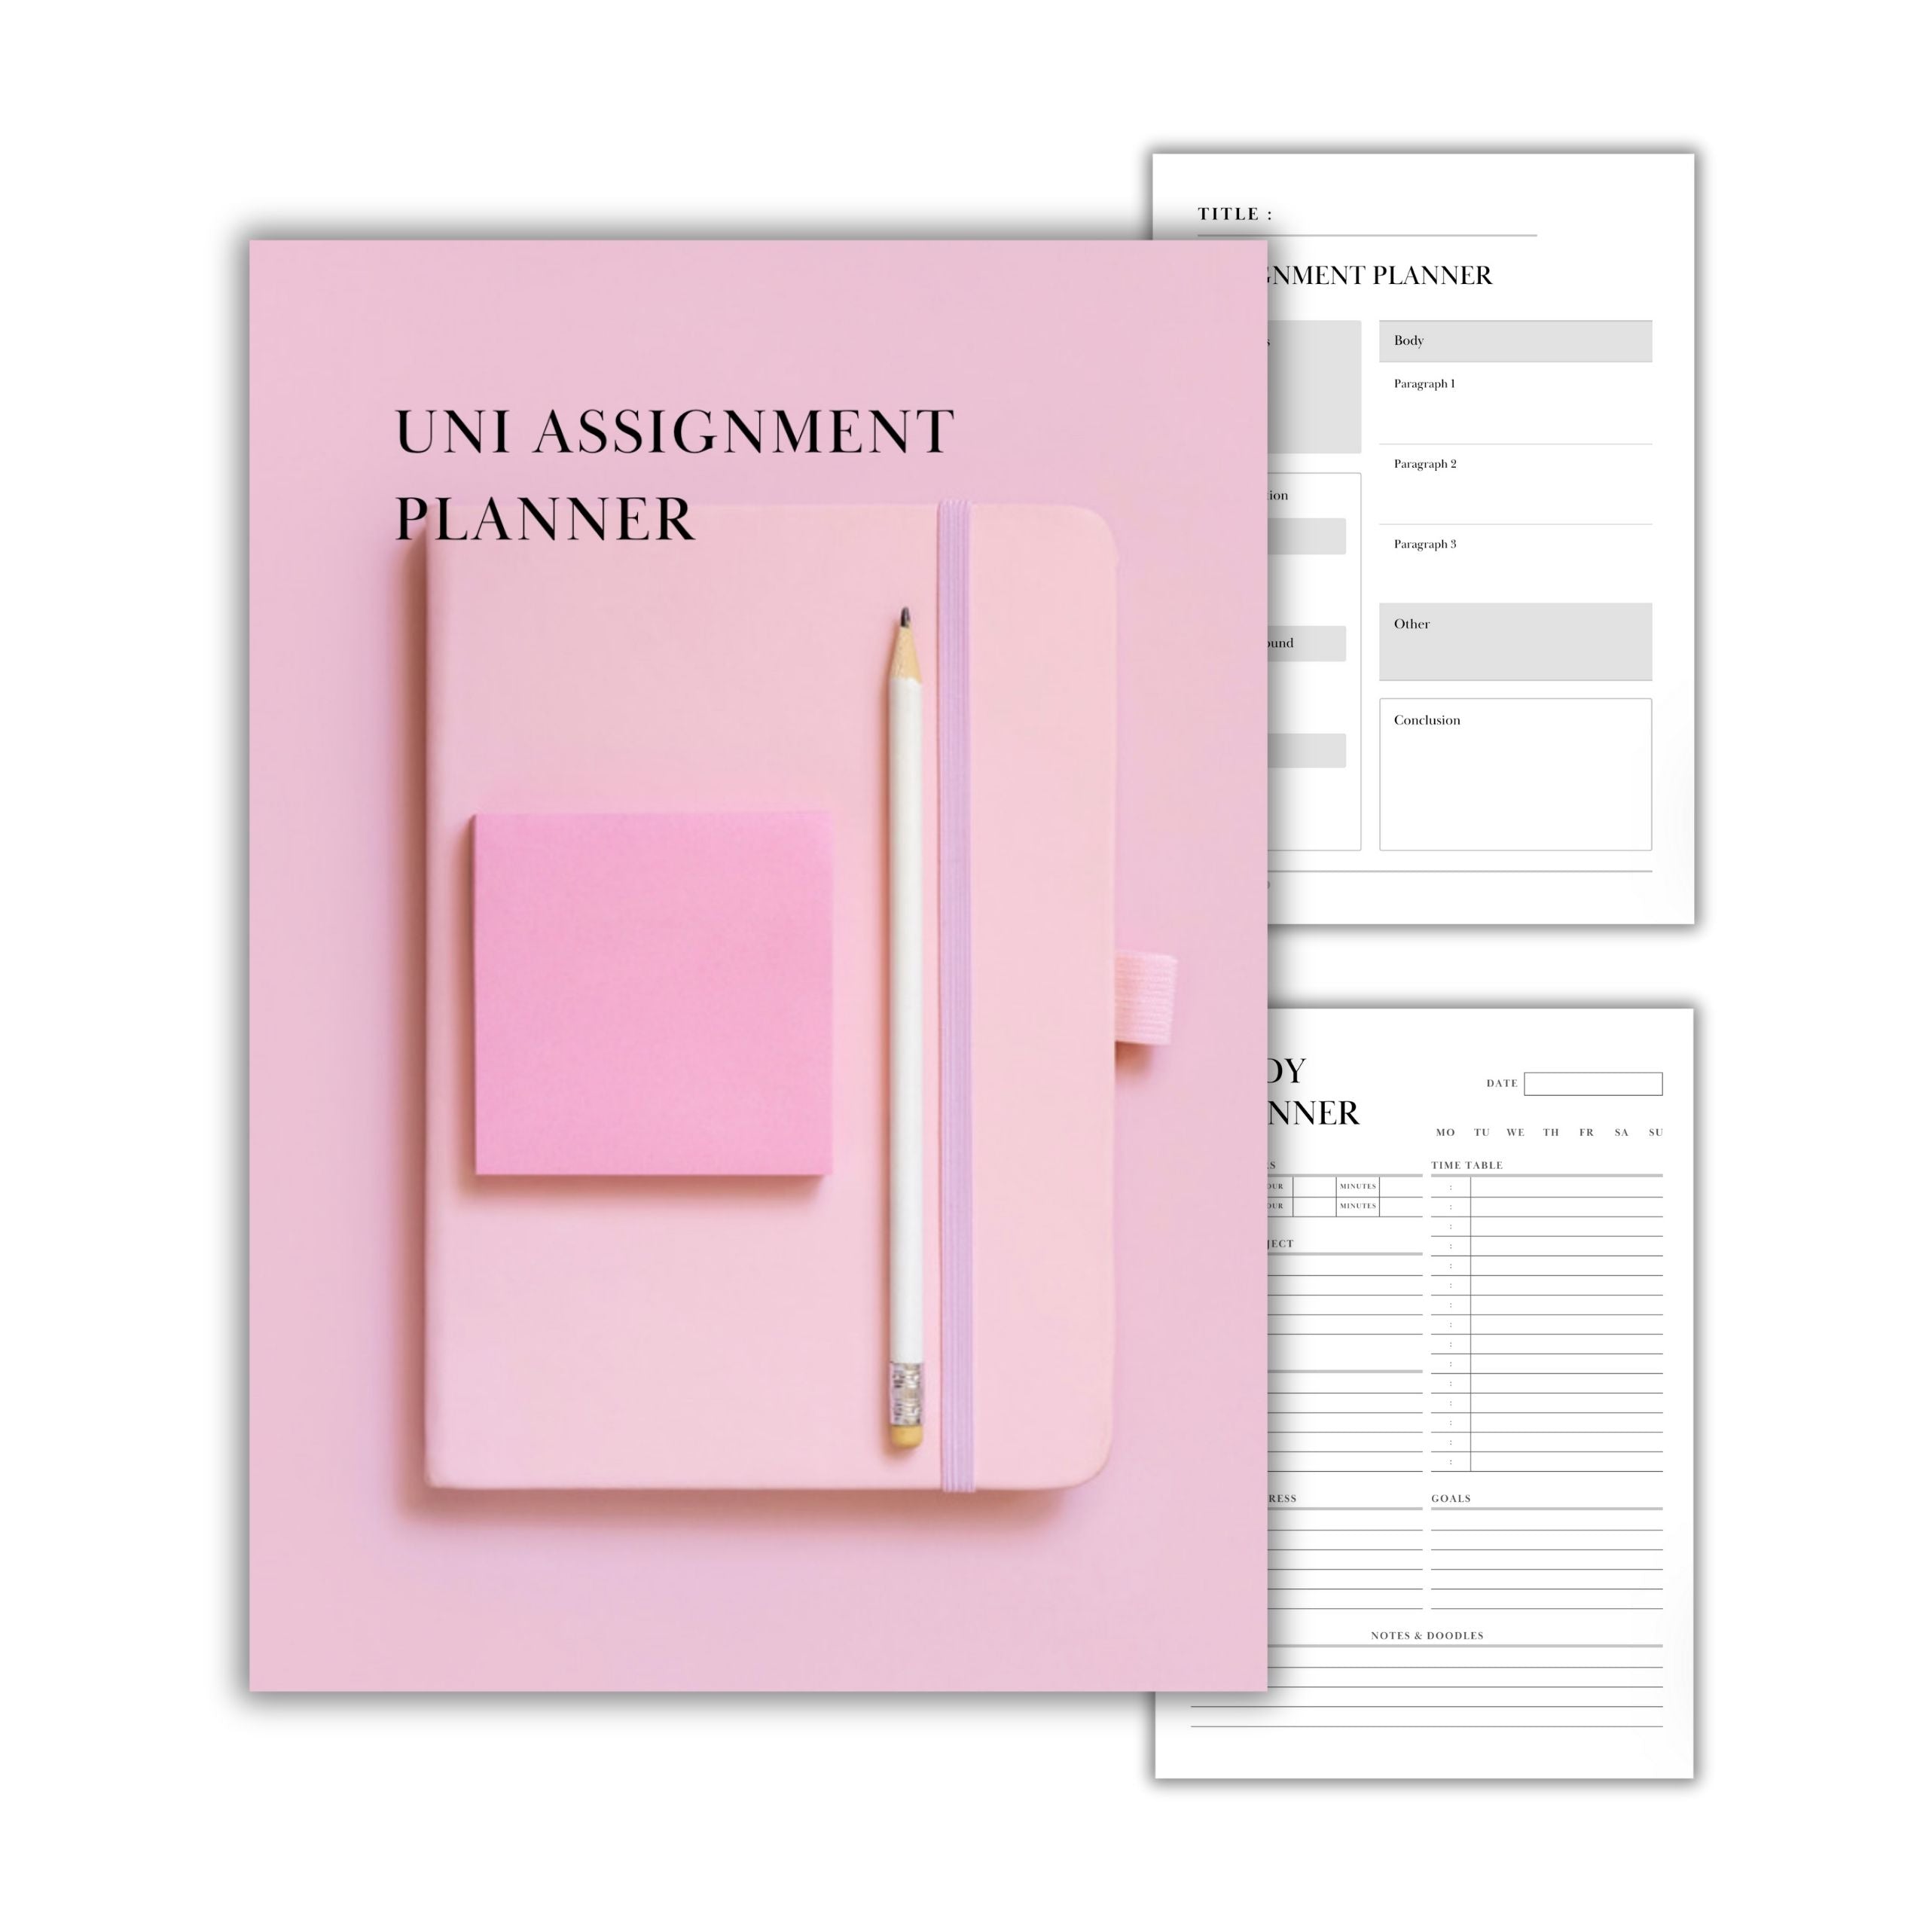 University Assignment Planner Booklet Digital Download